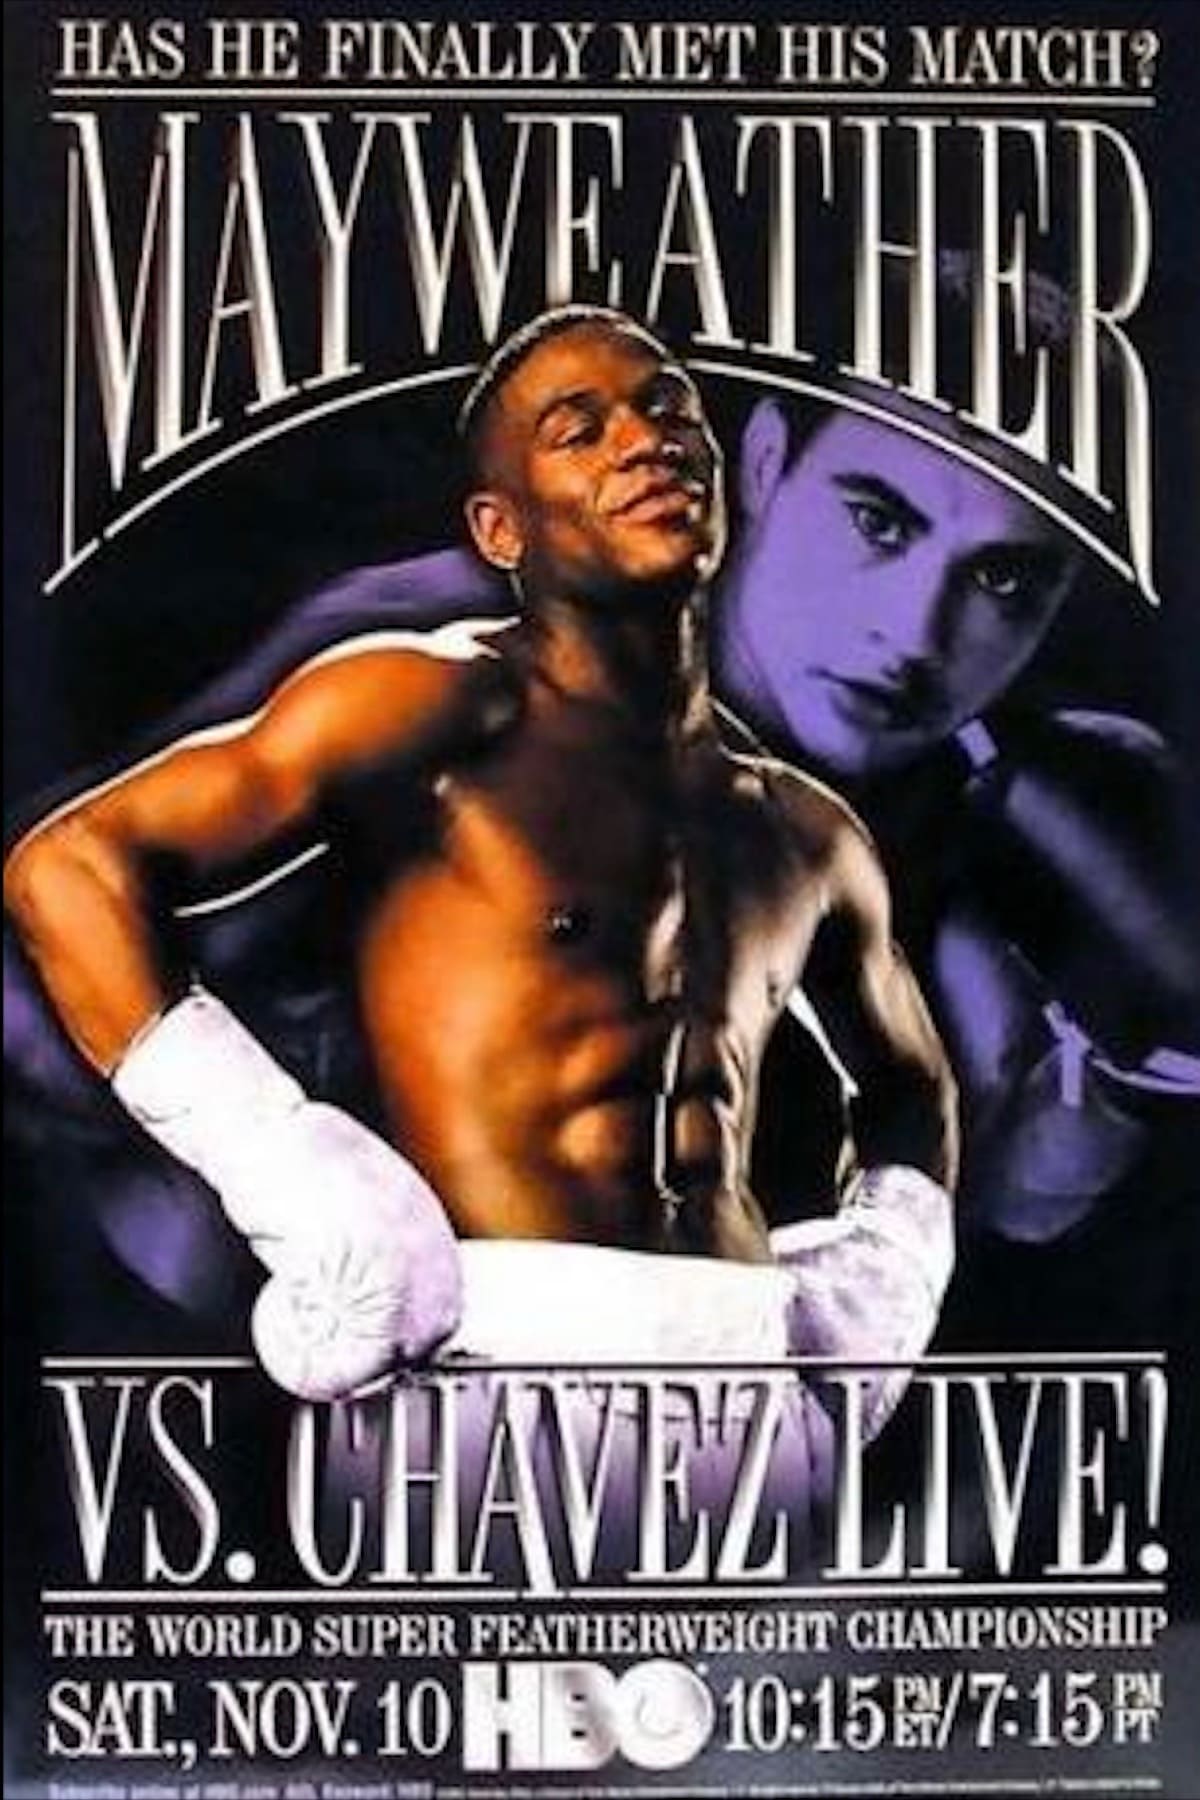 Floyd Mayweather Jr. vs. Jesus Chavez